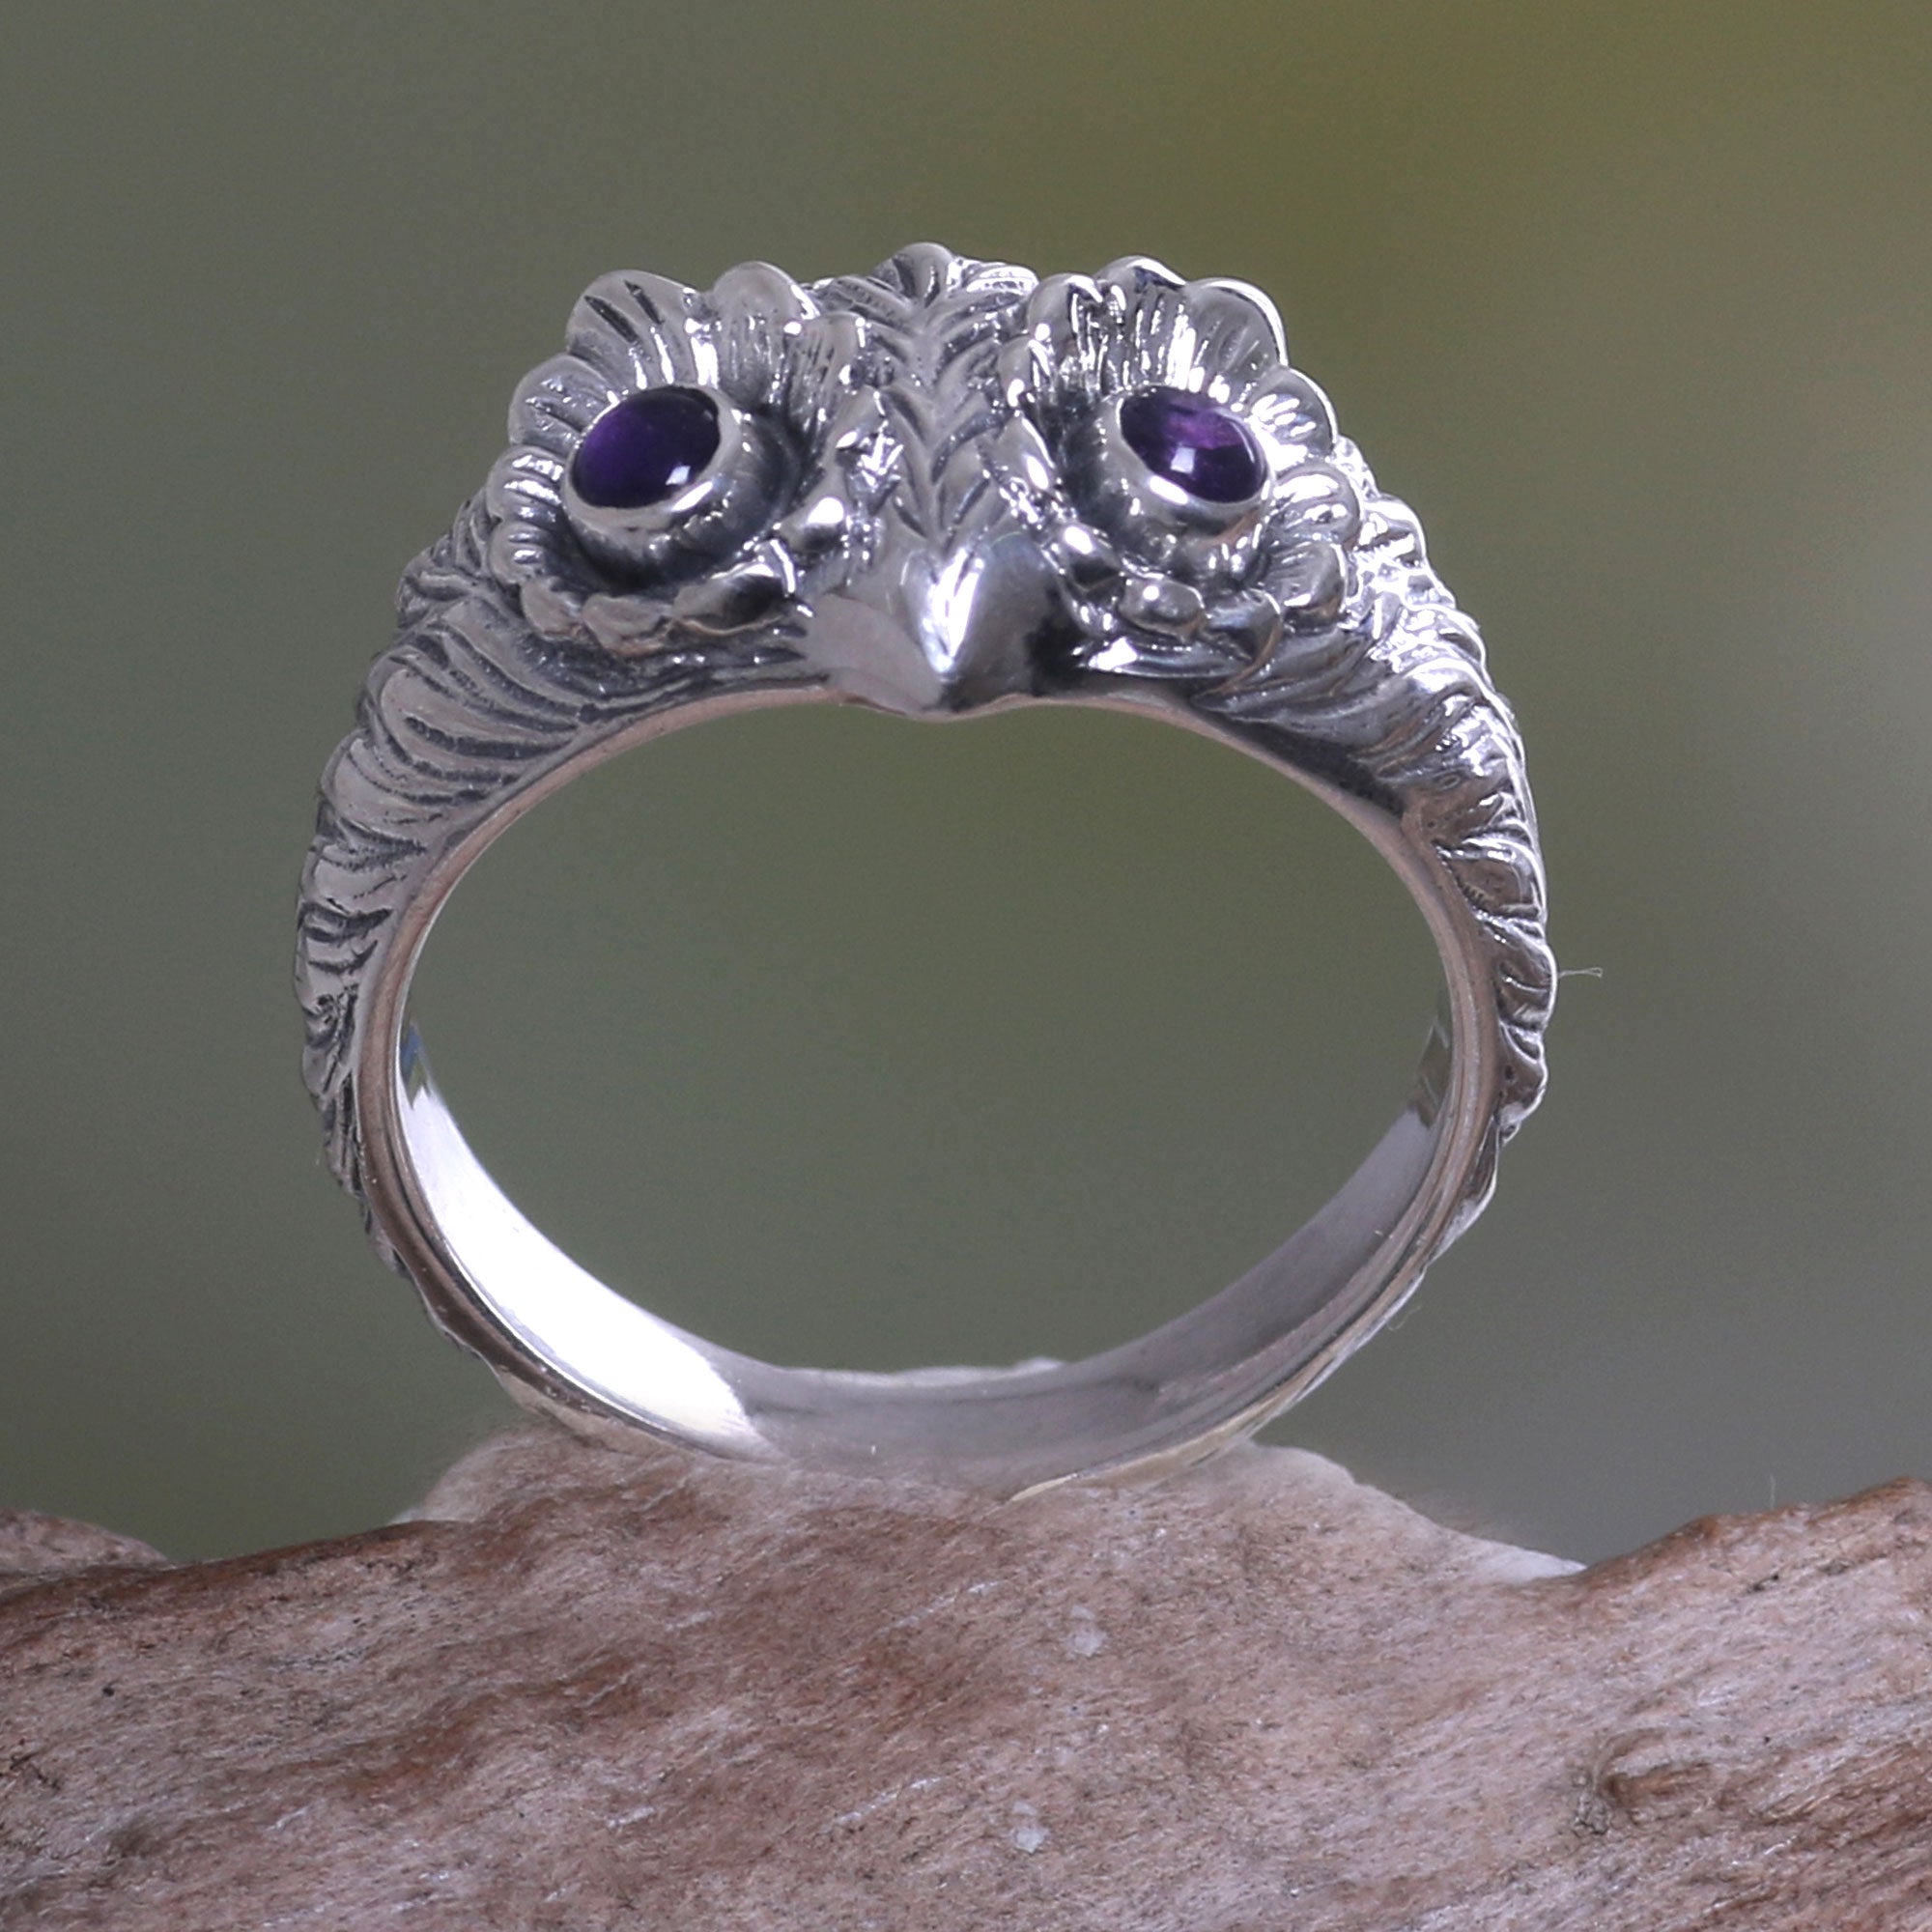 NOVICA Owl Wisdom Amethyst & Silver Band Ring - Size 11